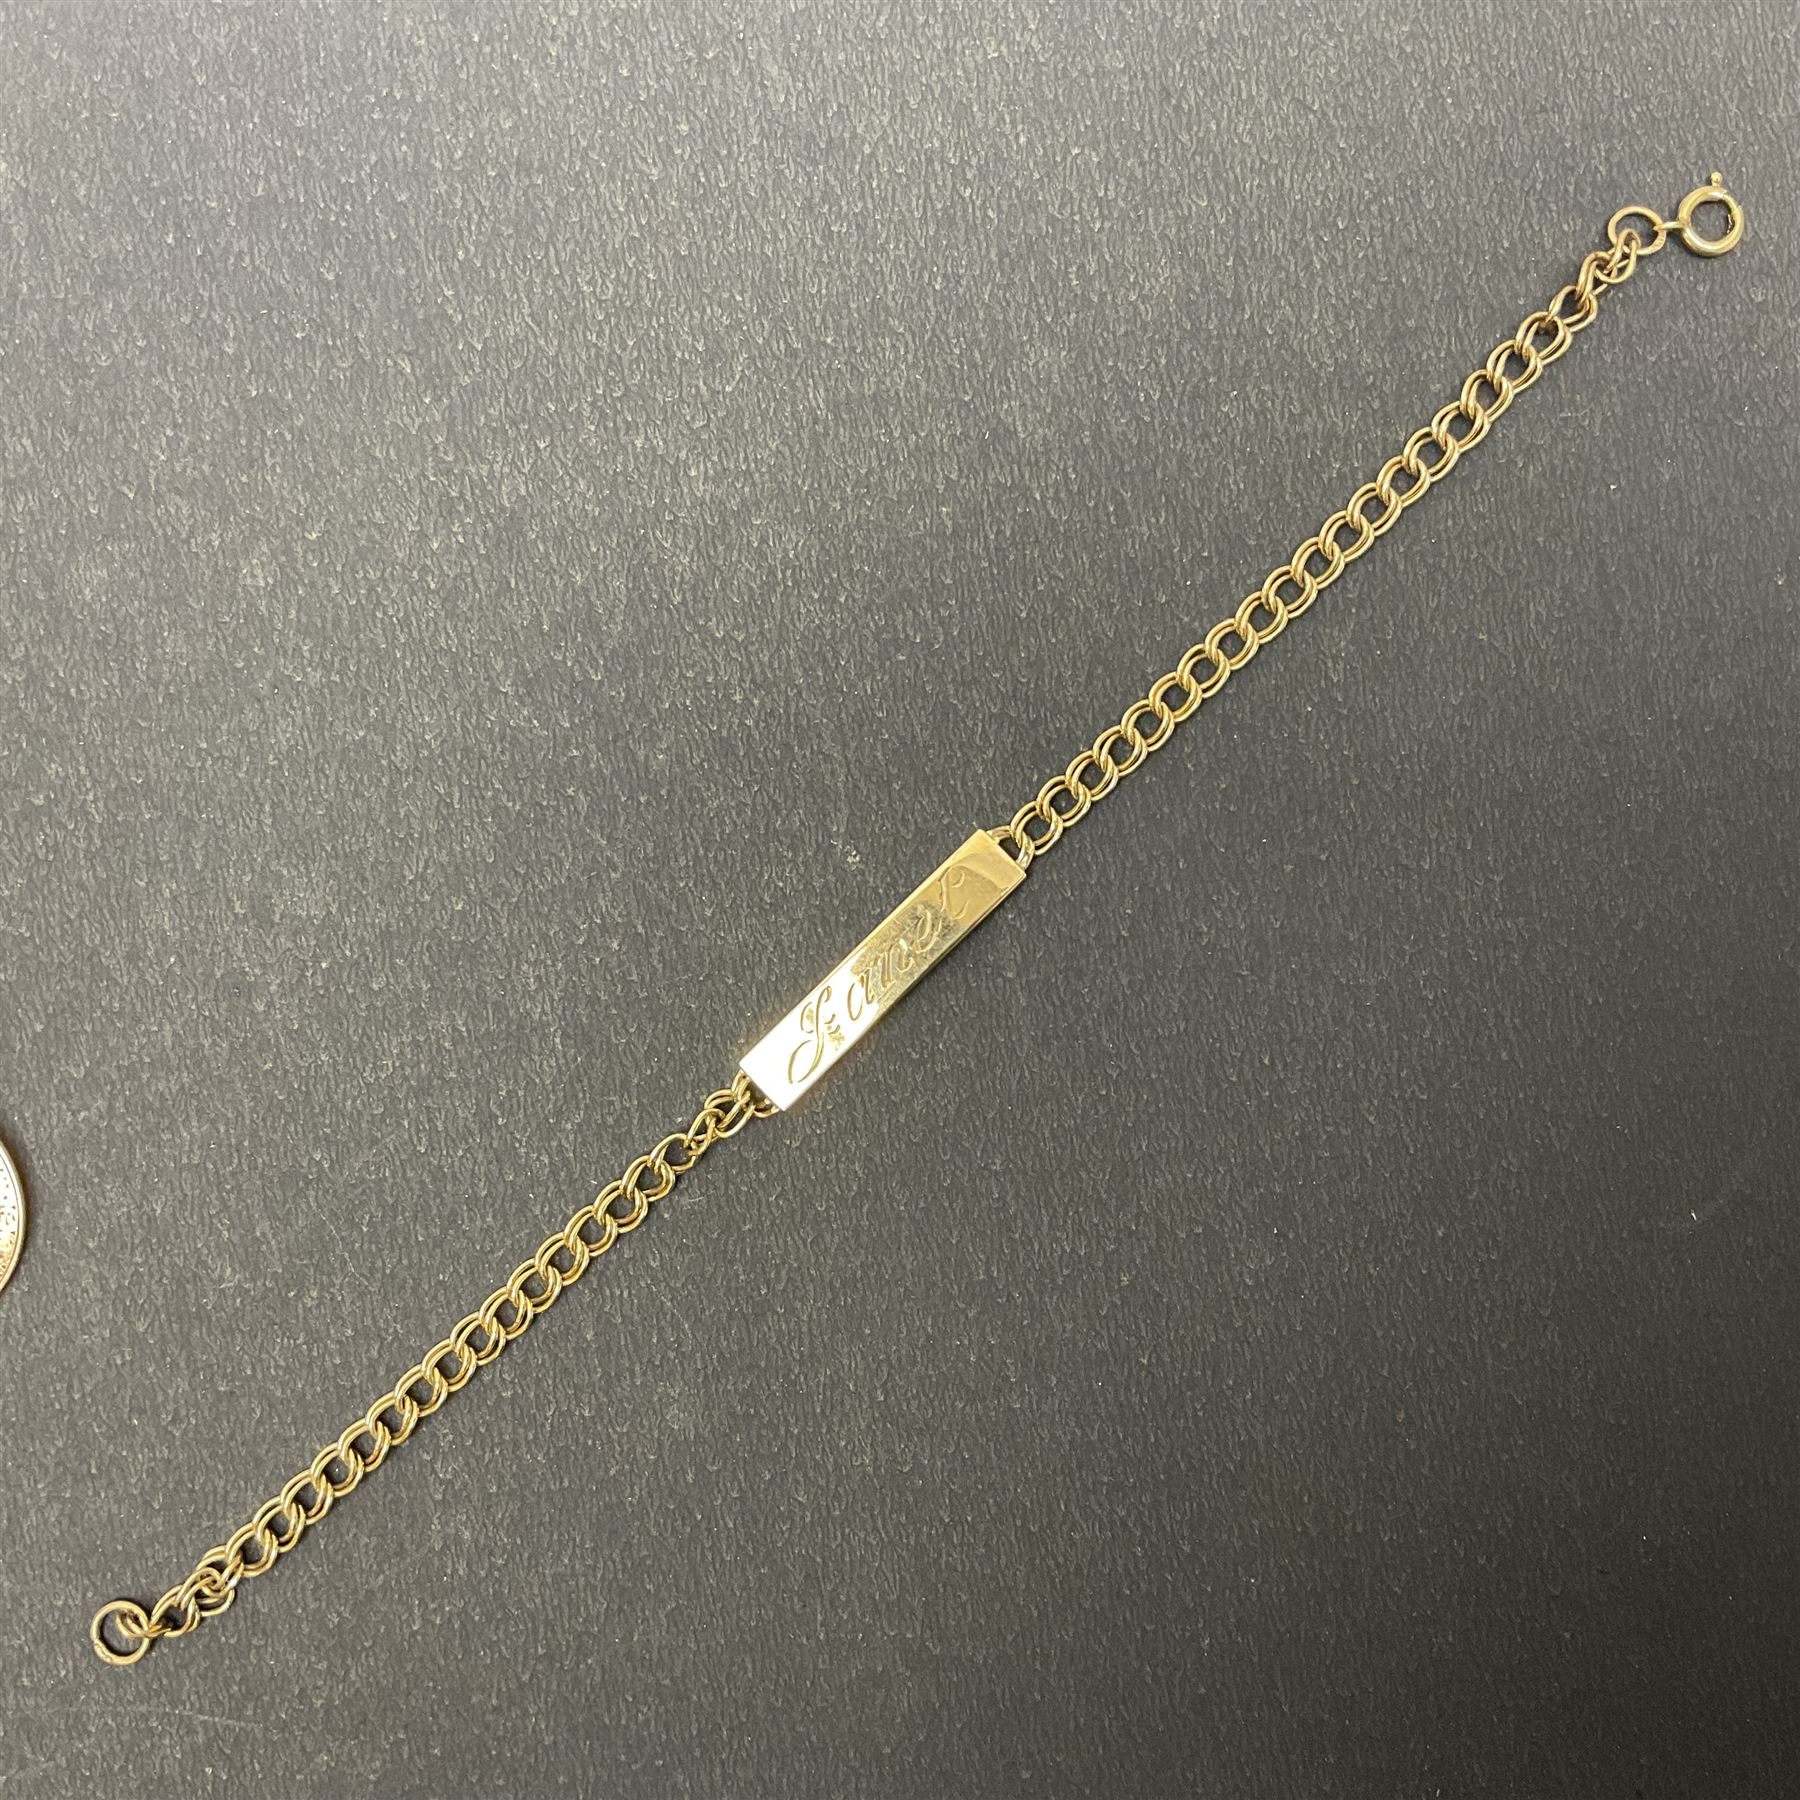 9ct gold jewellery including identity bracelet - Image 2 of 7